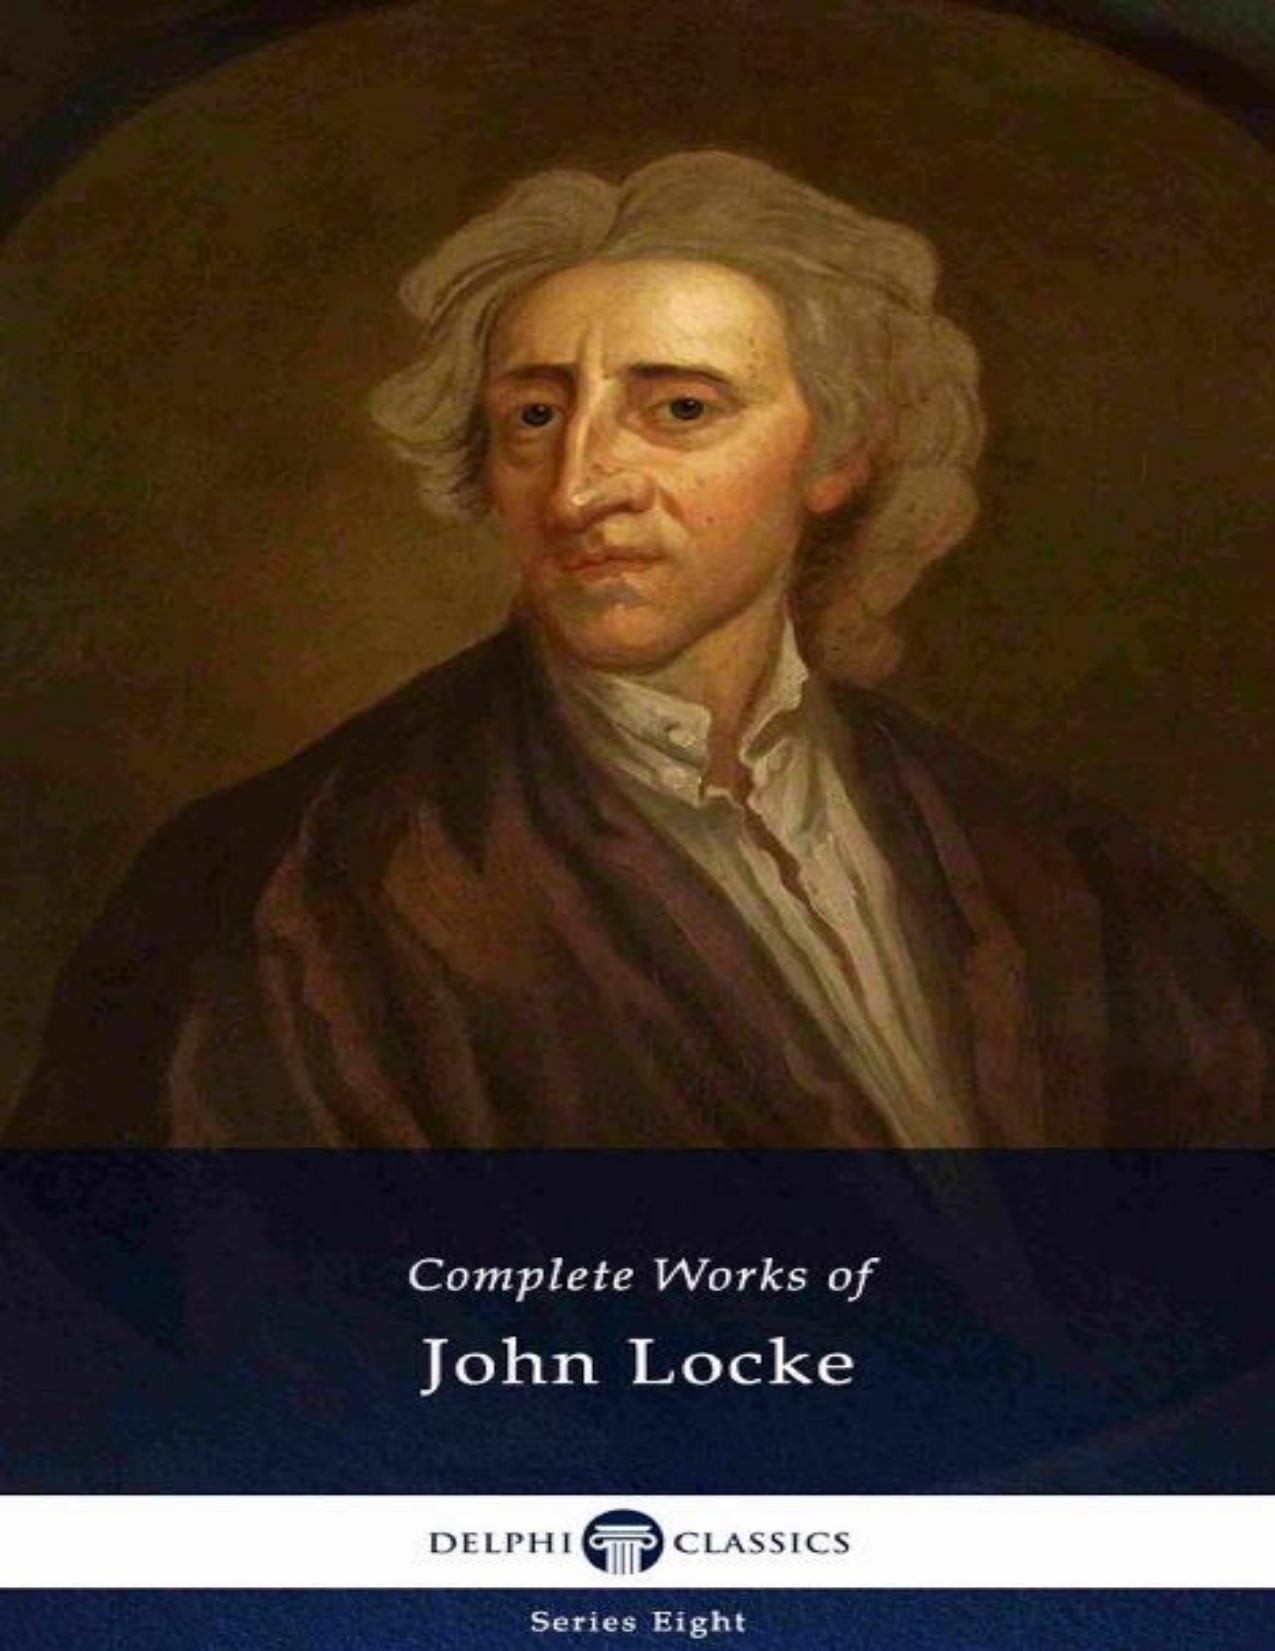 Complete Works of John Locke - PDFDrive.com